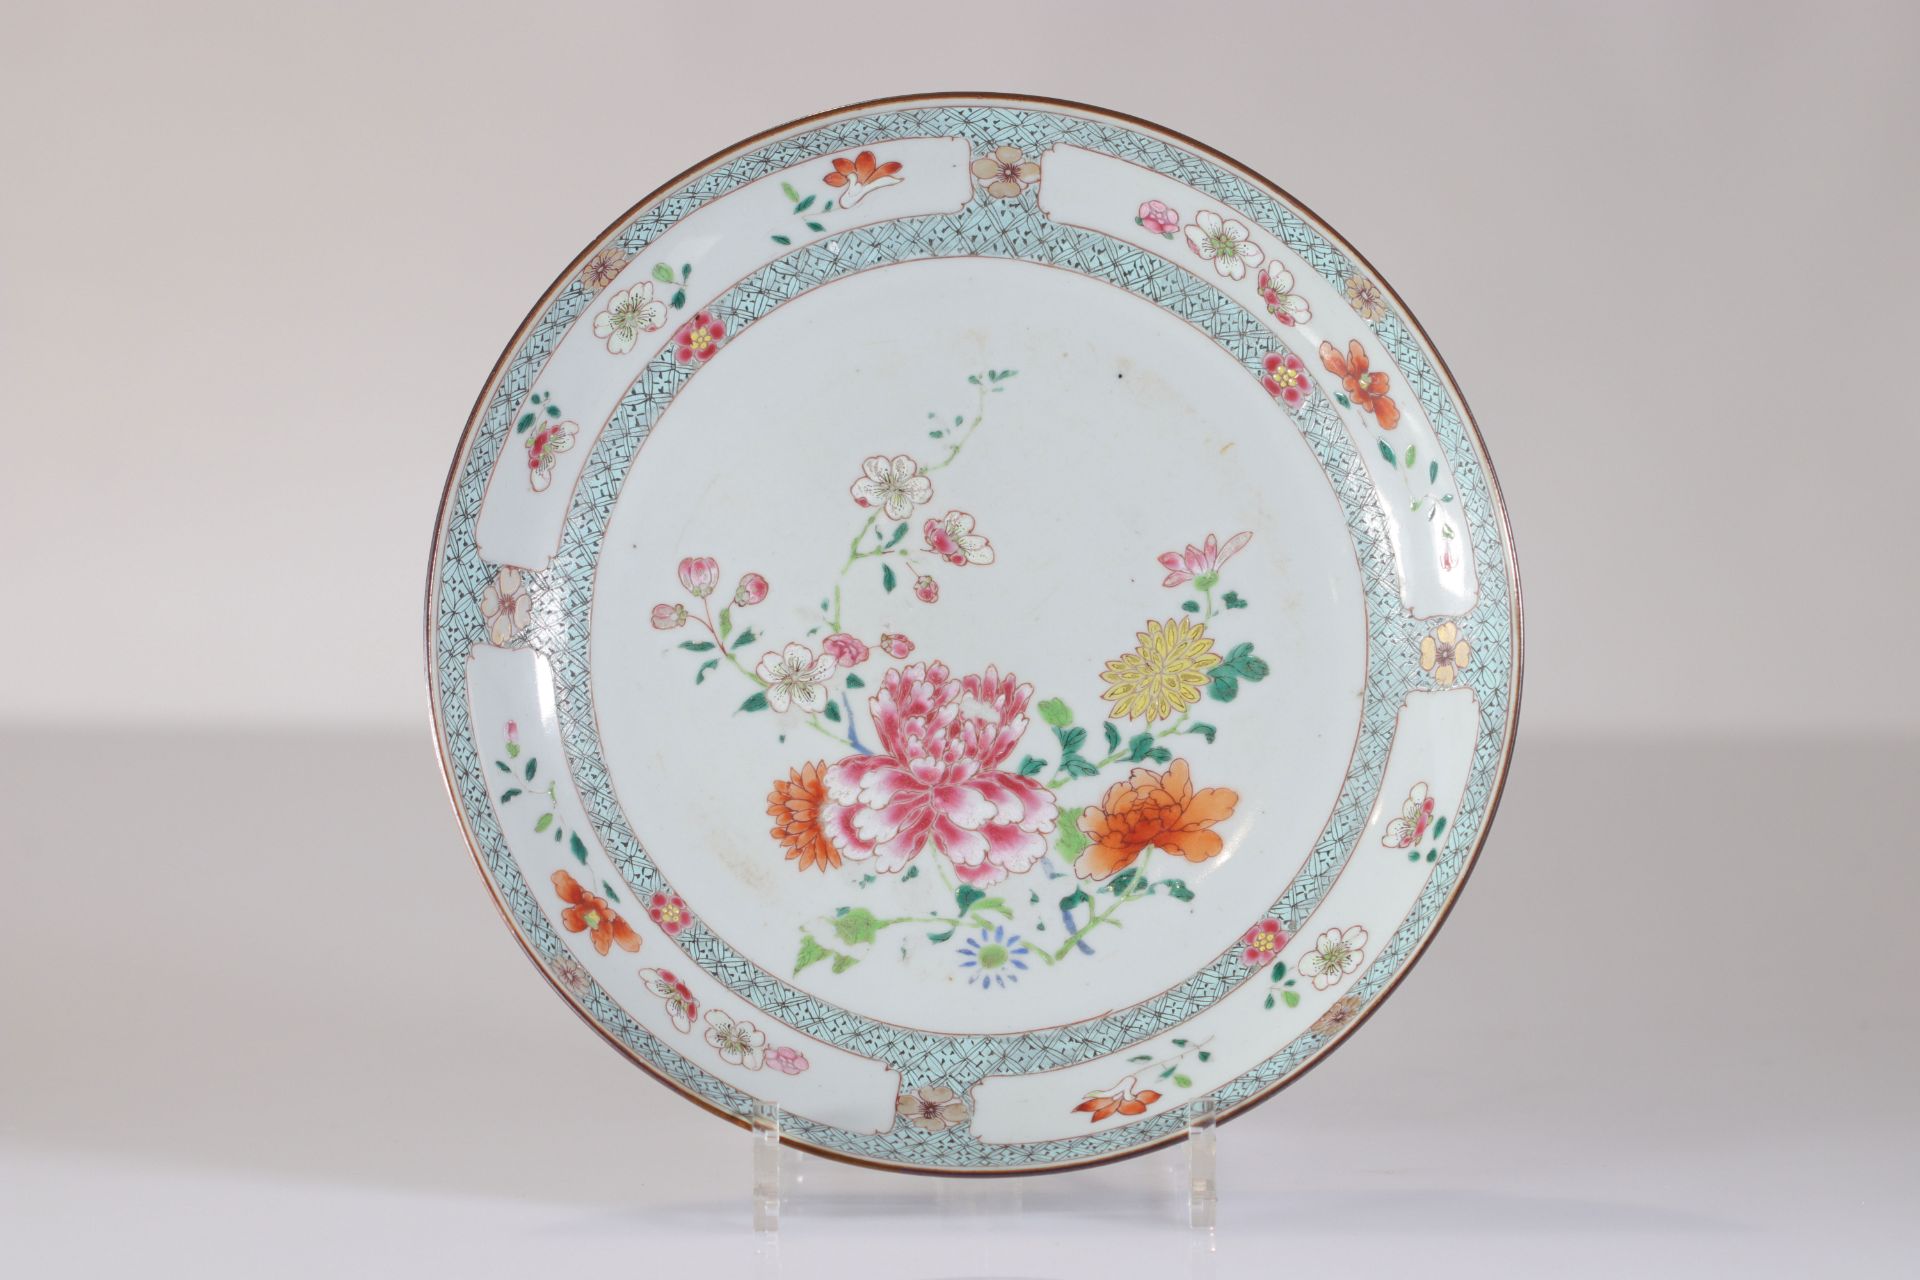 18th century famille rose porcelain plate